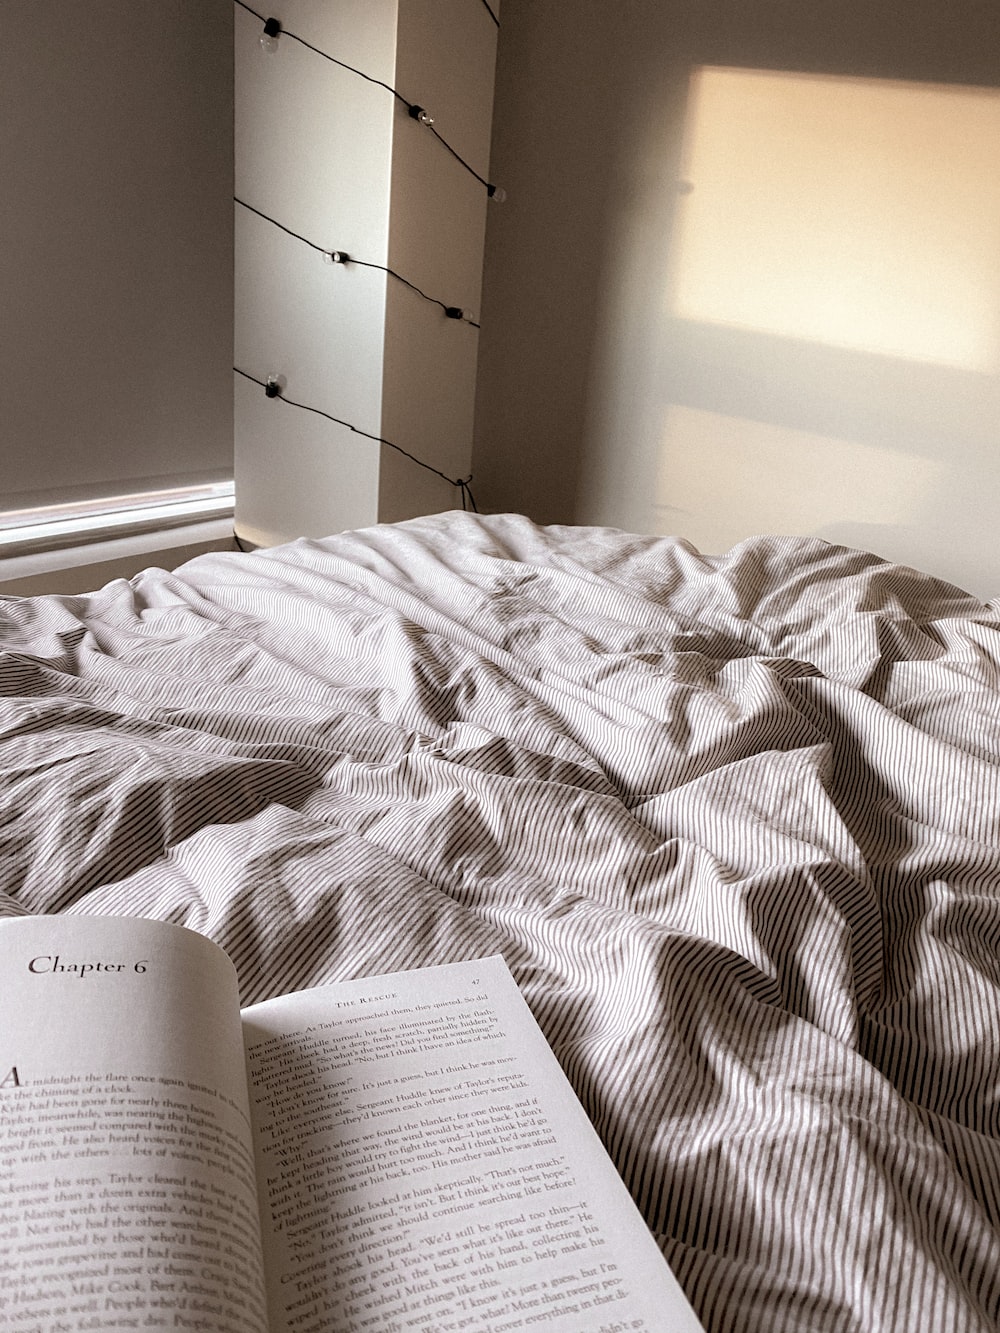 Should we keep books under bed?